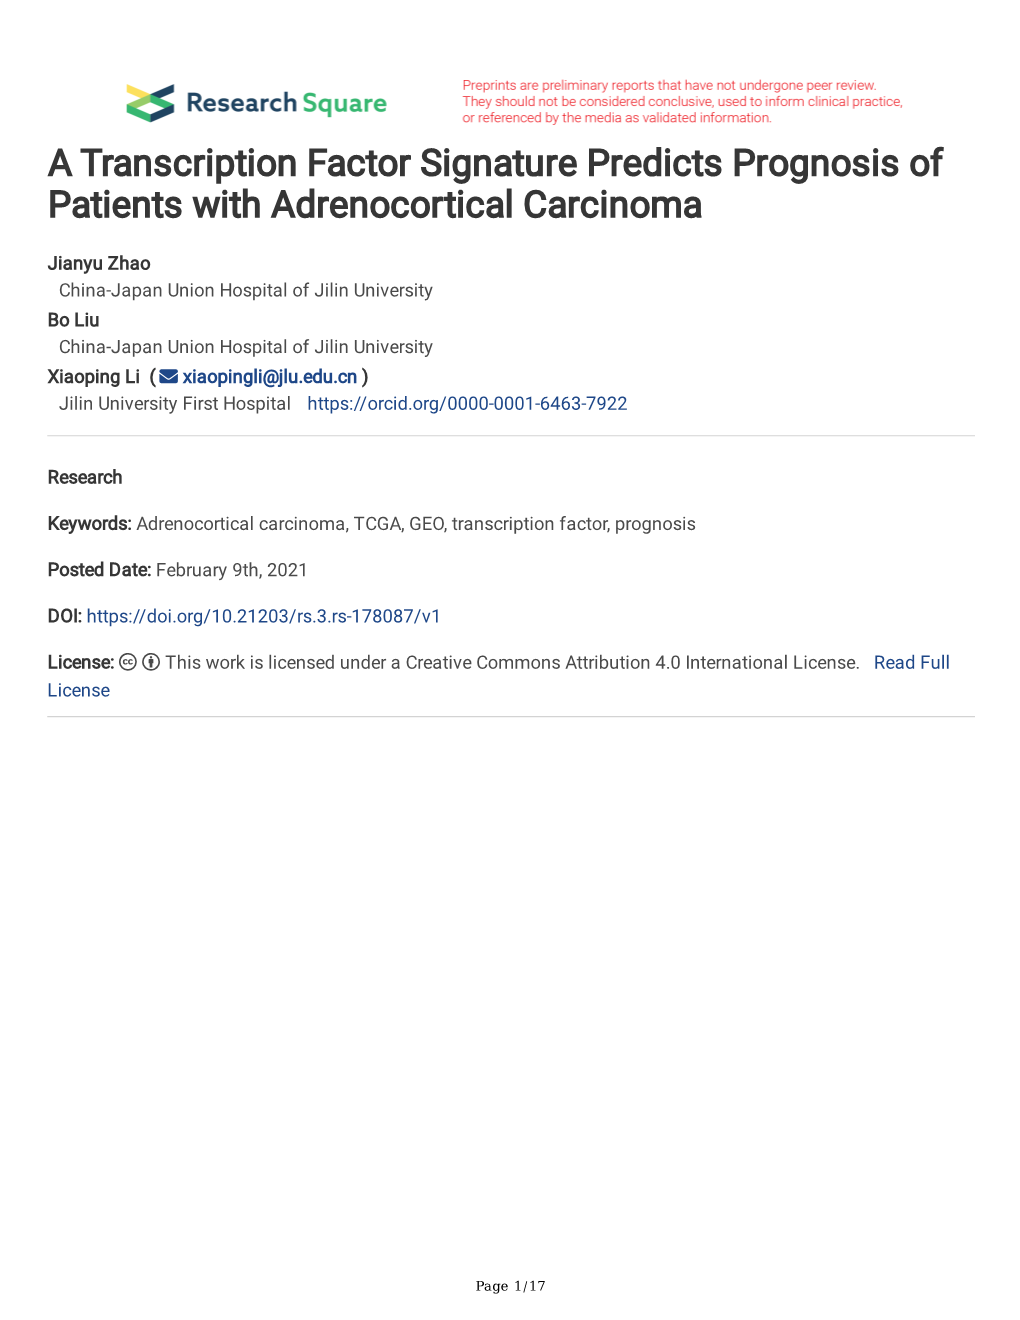 A Transcription Factor Signature Predicts Prognosis of Patients with Adrenocortical Carcinoma